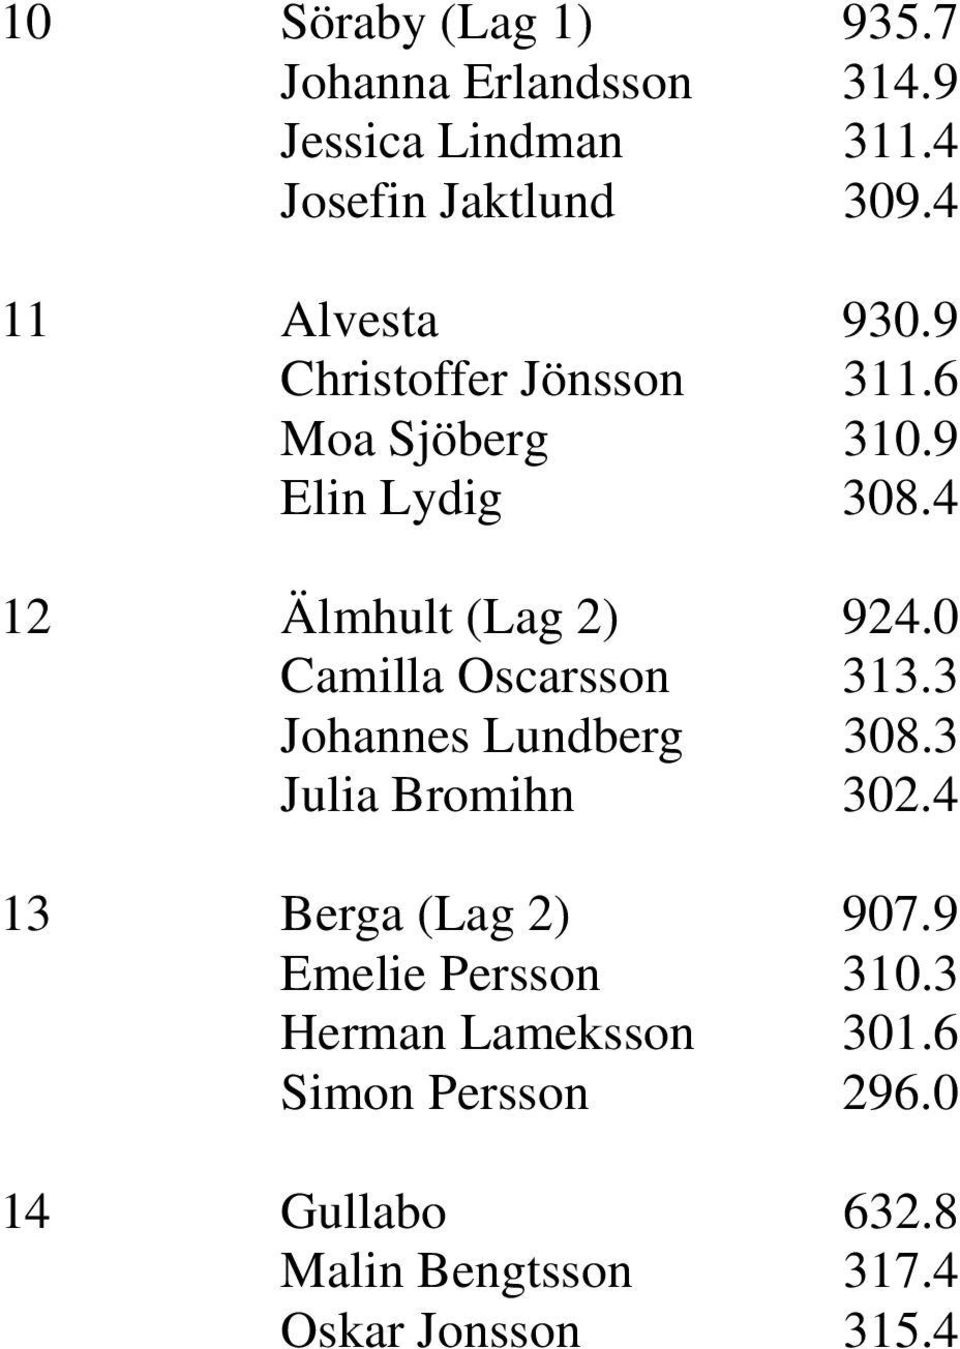 0 Camilla Oscarsson 313.3 Johannes Lundberg 308.3 Julia Bromihn 302.4 13 Berga (Lag 2) 907.